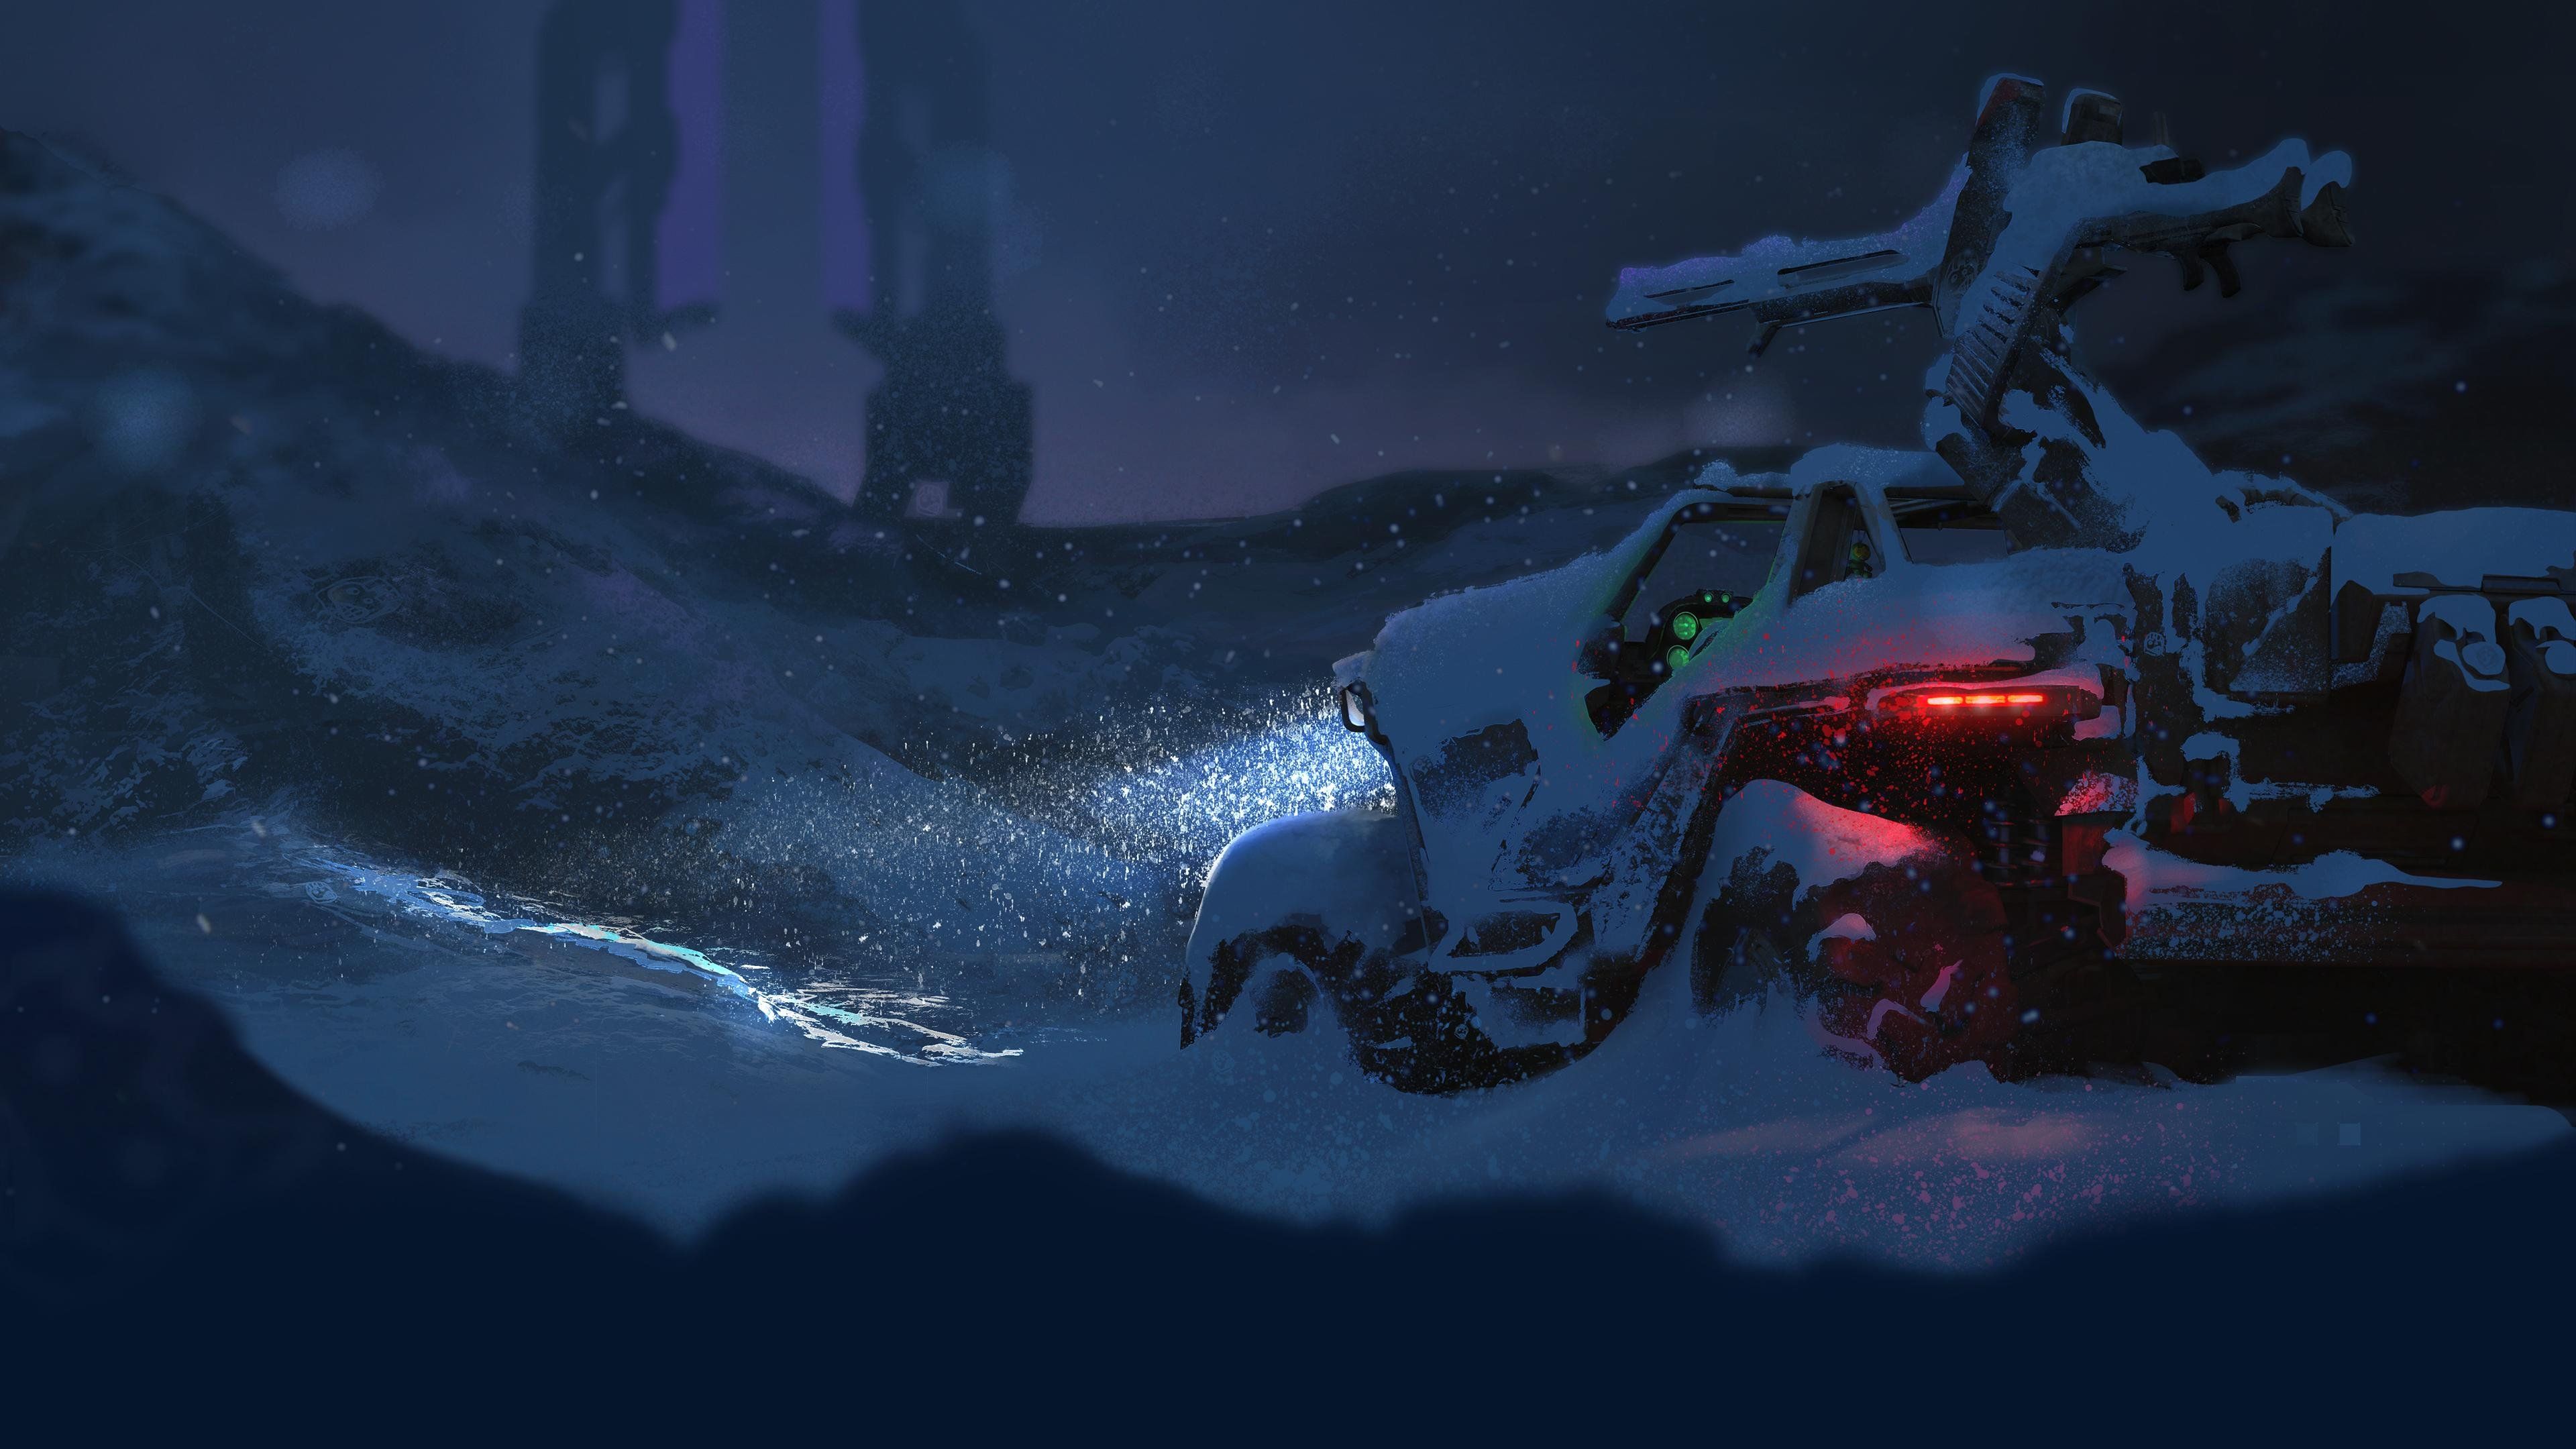 Halo Warthog in Snow 4K wallpaper. Halo warthog, Halo armor, Halo background